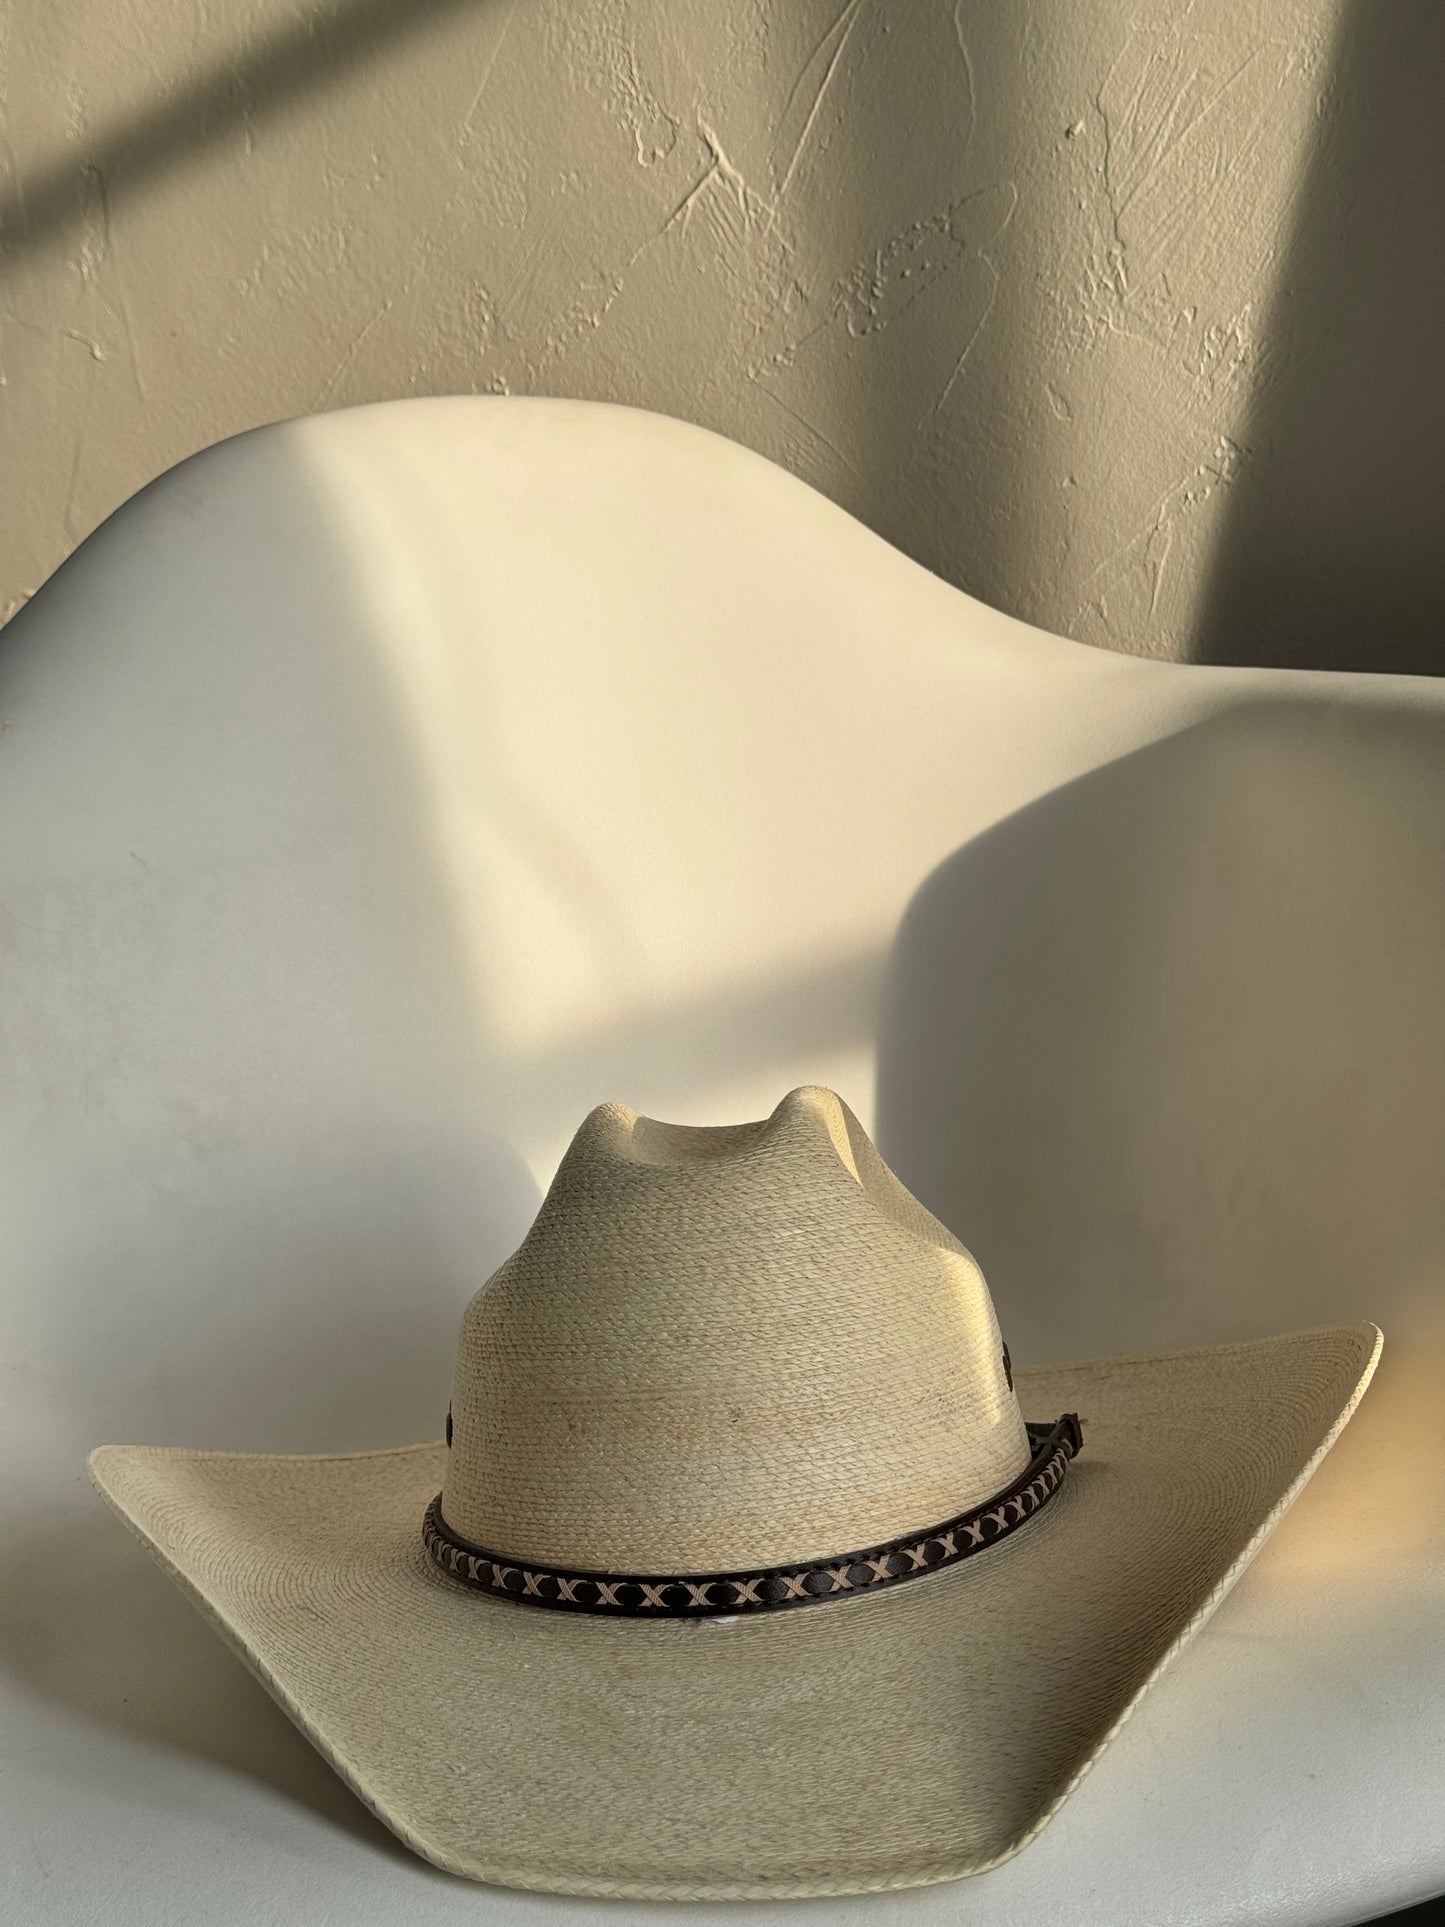 Jackson Classic Palm Spring/Summer Straw Cowboy Hat Leather Cross Belt